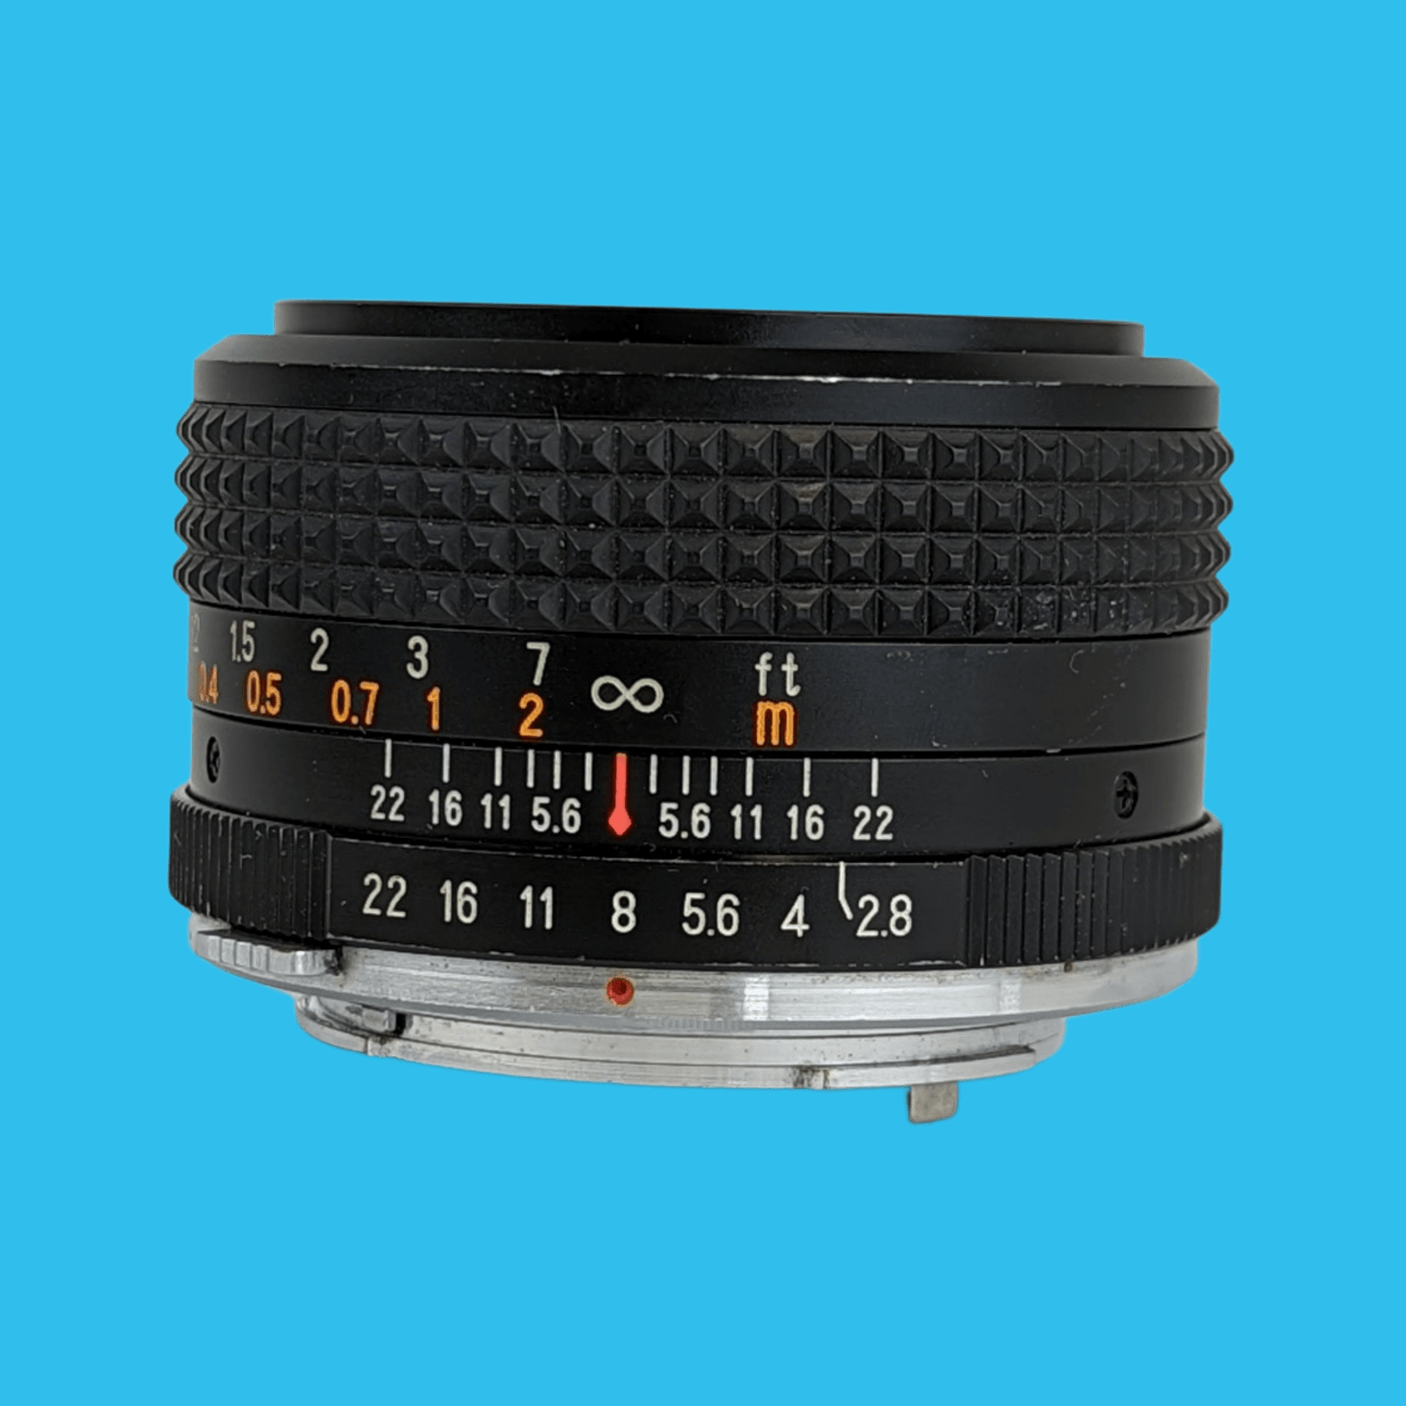 Itorex MC 28mm f/2.8 Camera Lens